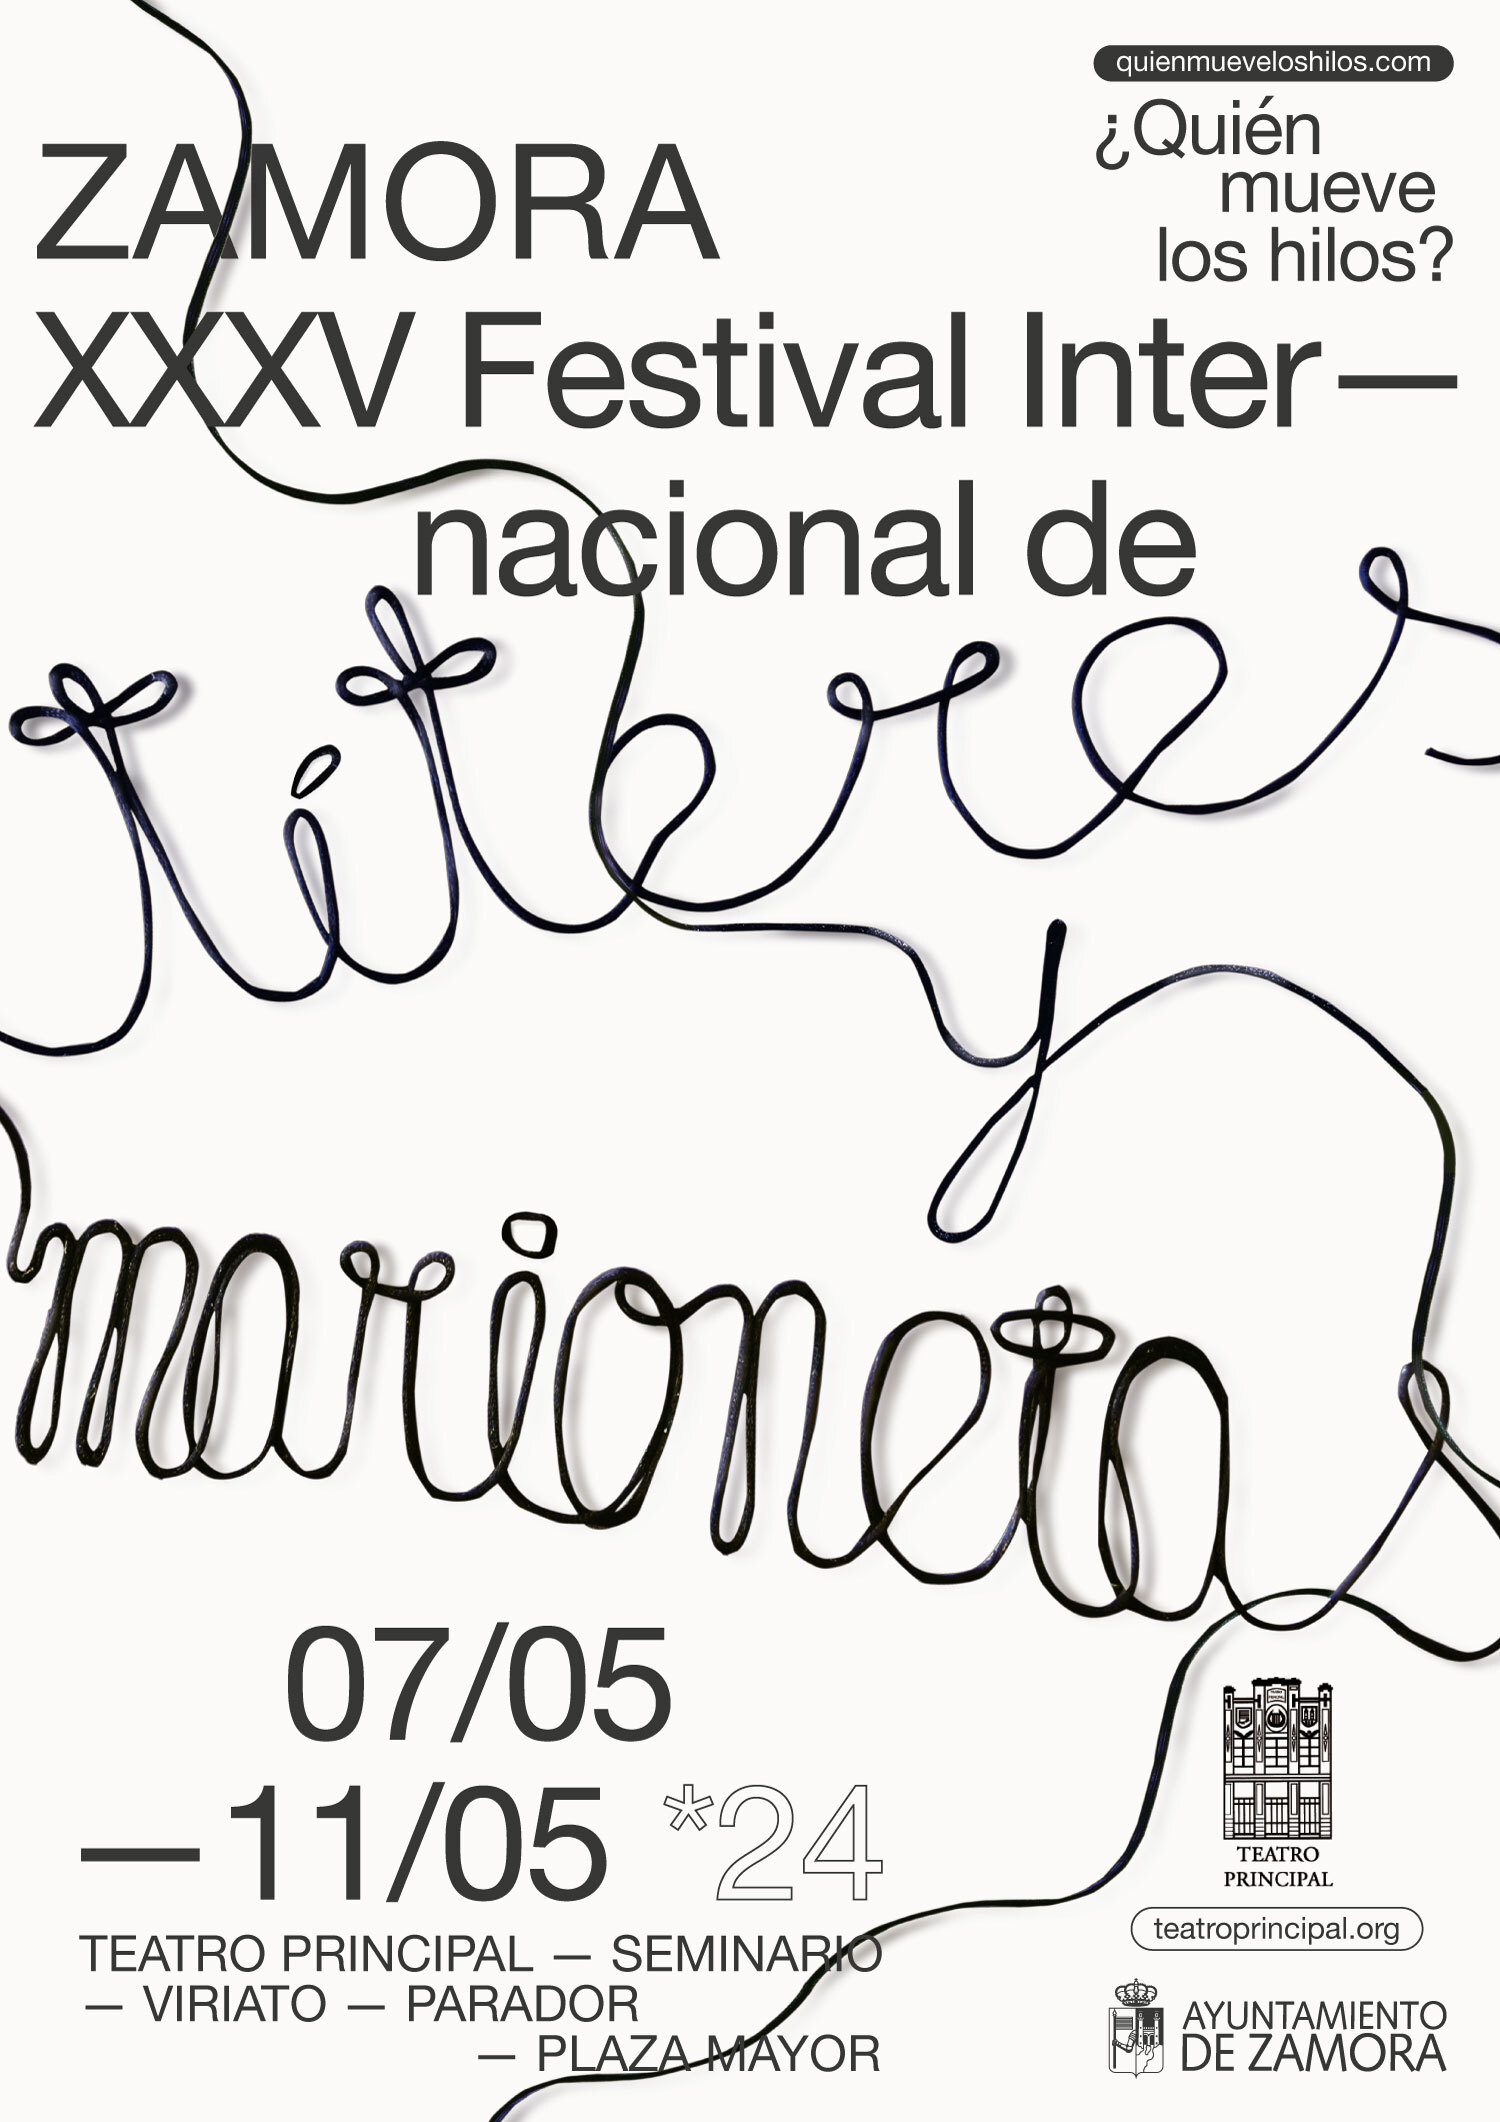 XXXV Festival Internacional de Títeres y Marionetas de Zamora